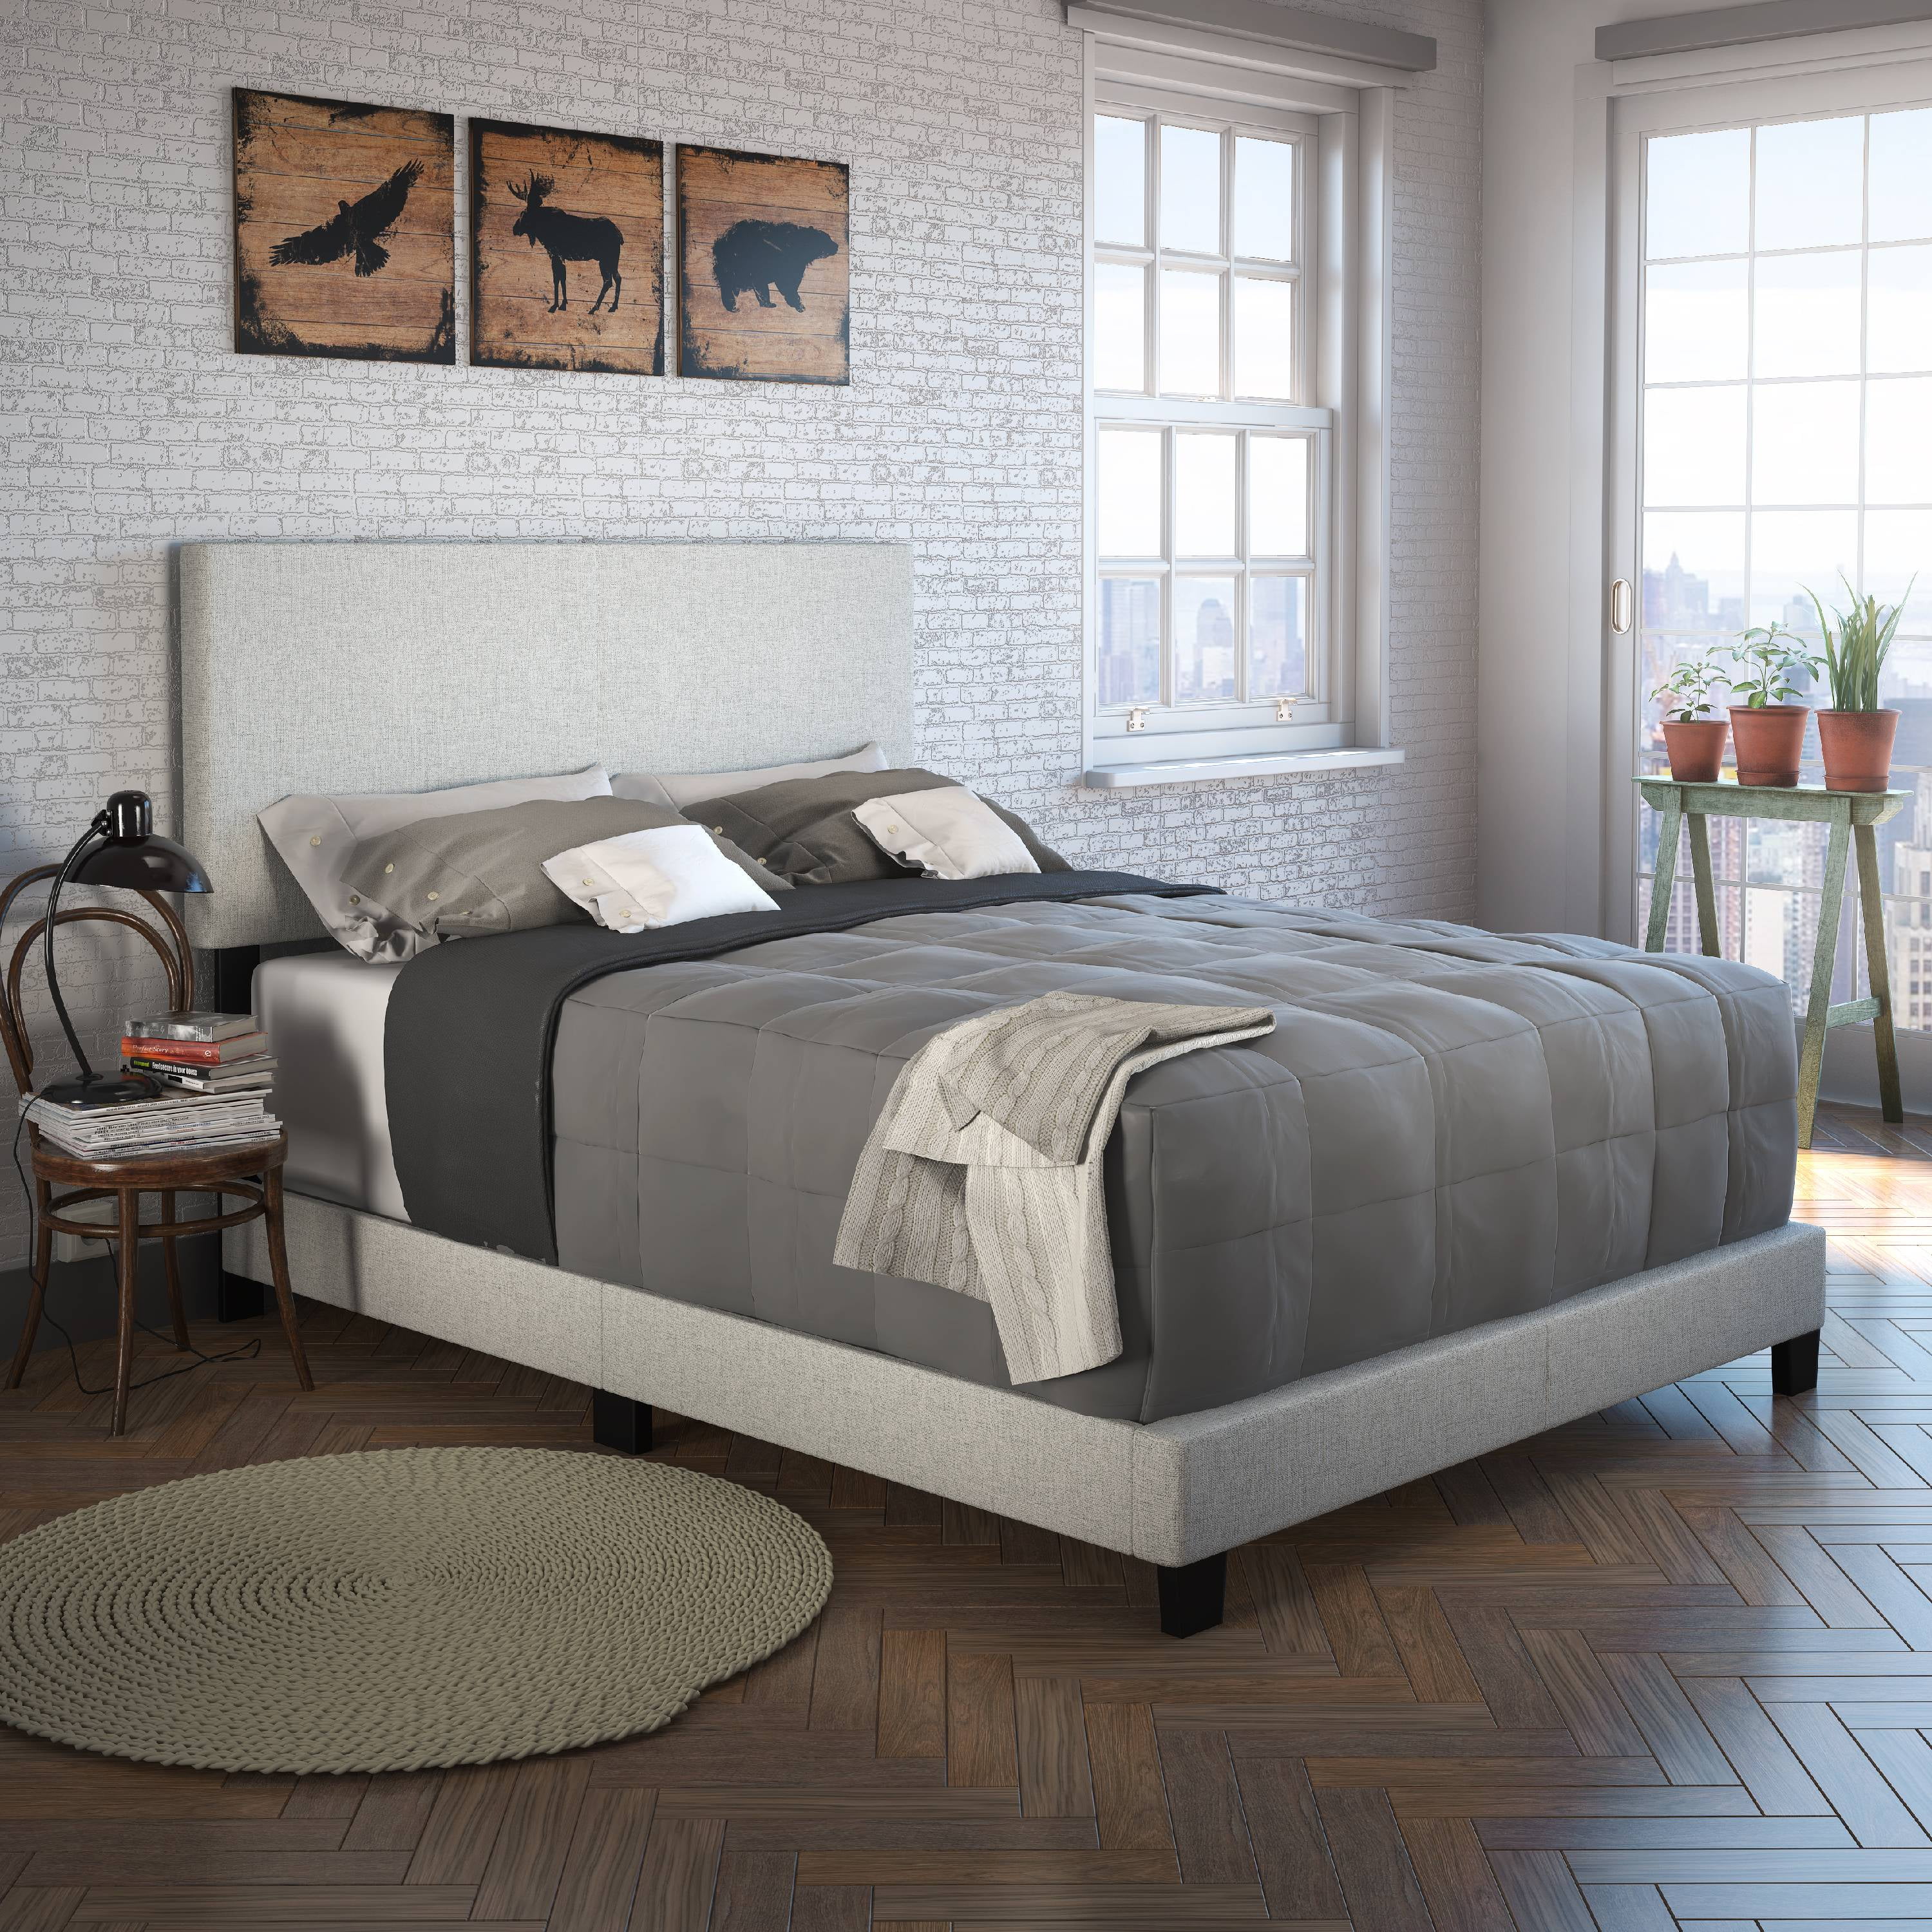 Boyd Sleep Milan Upholstered Linen Platform Bed, Queen, White - Walmart.com